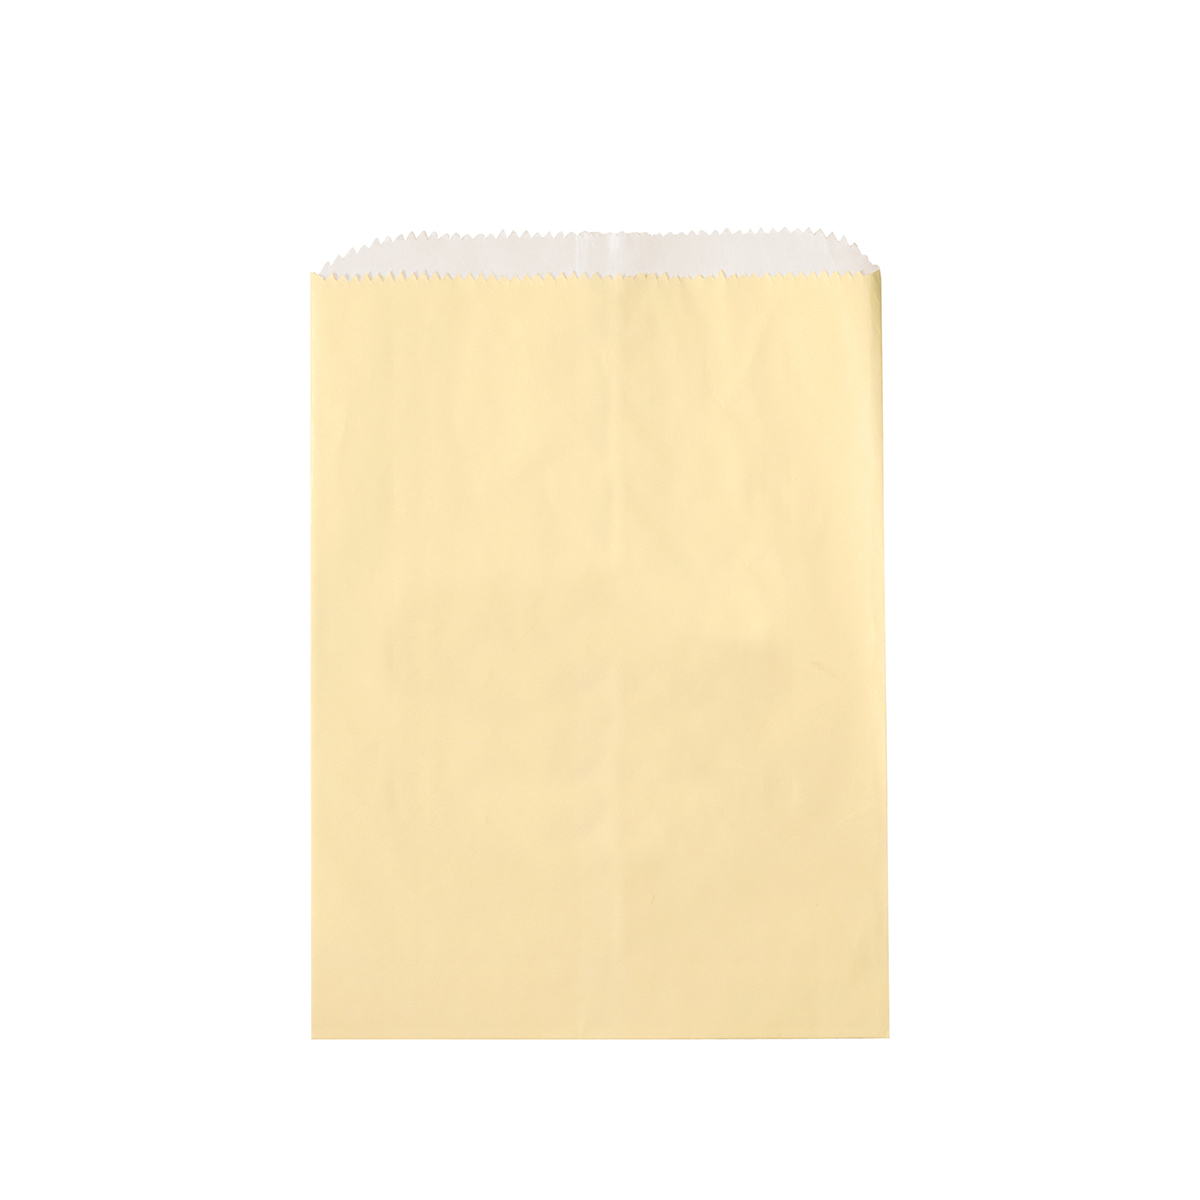 Cream Glassine Lined Paper Bag (4.75"W x 6.75"H)